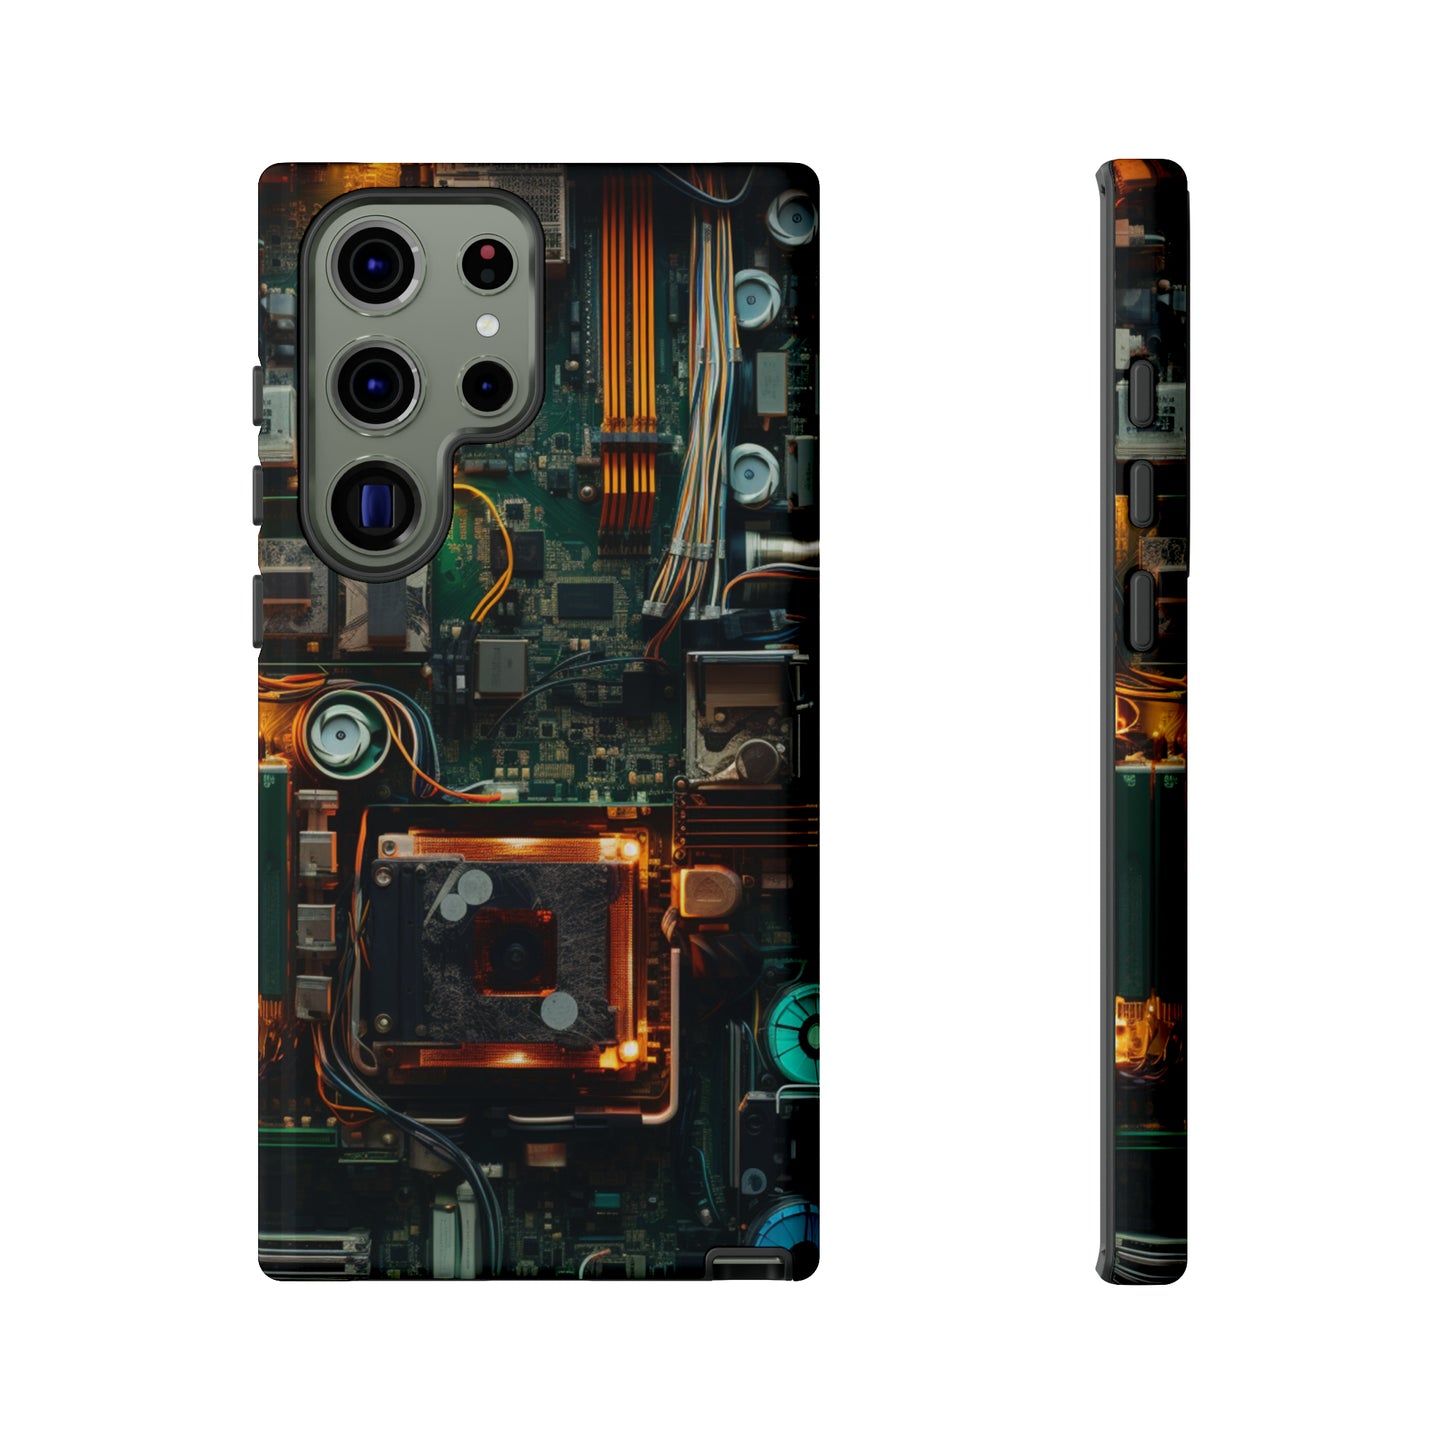 Circuit Board Themed Tough Phone Case